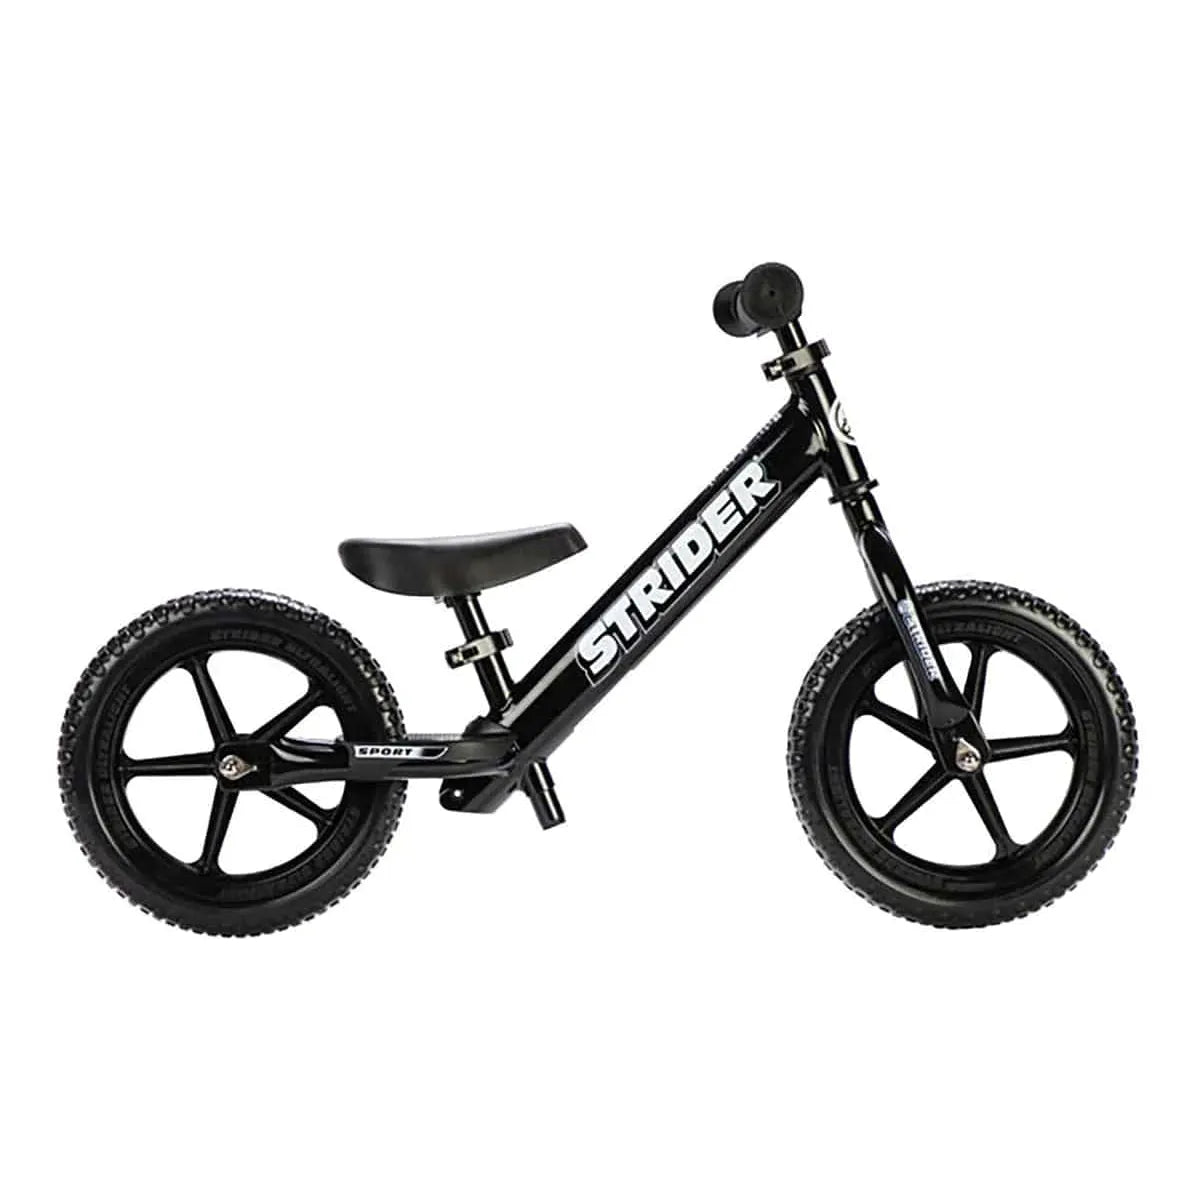 Strider Sport 12 inch Balance Bike - Black right side